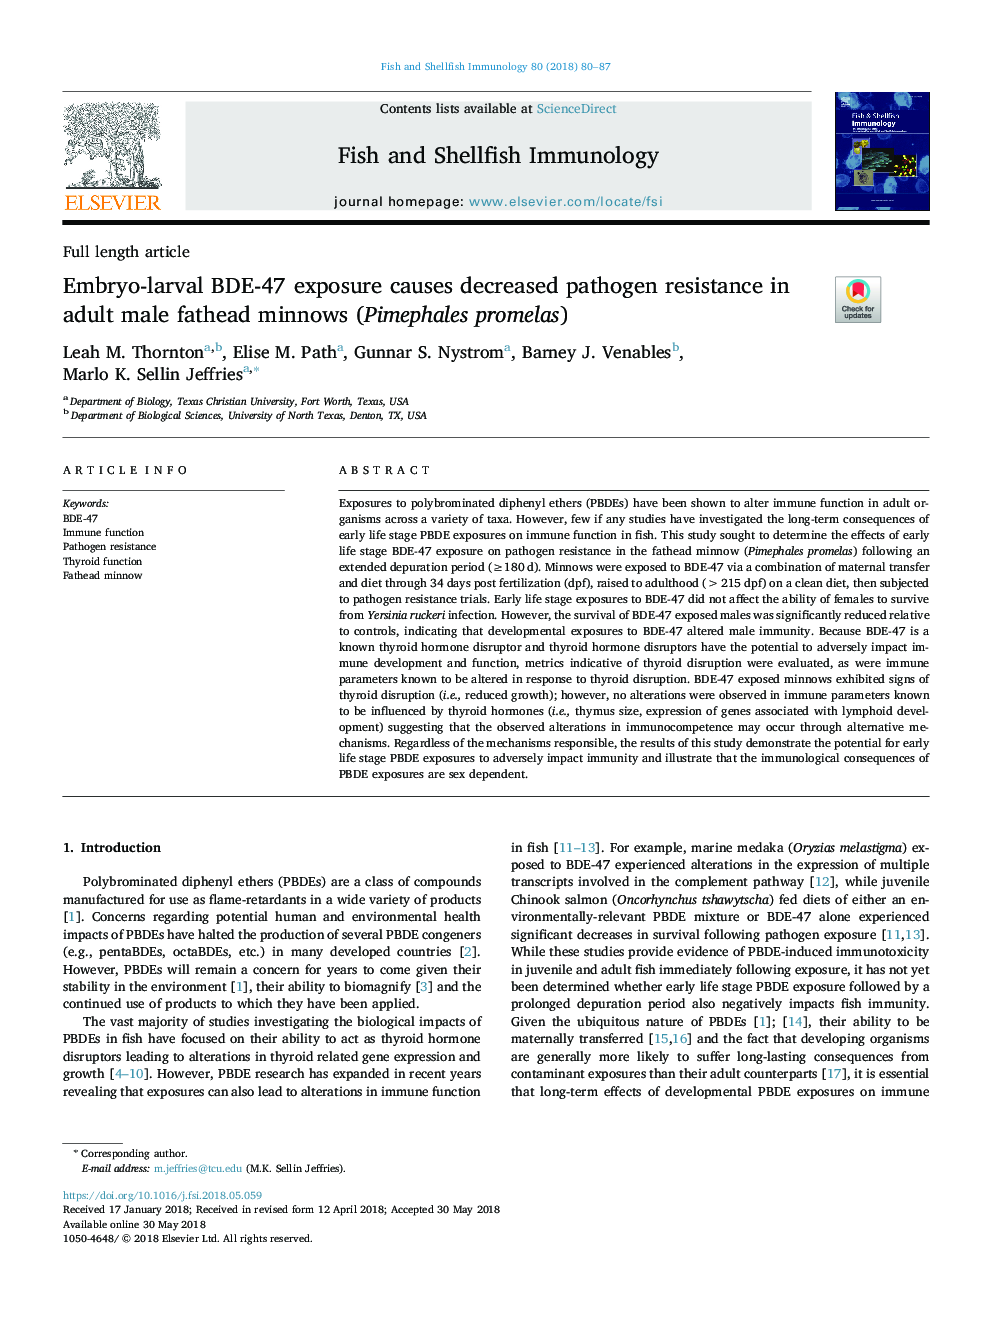 Embryo-larval BDE-47 exposure causes decreased pathogen resistance in adult male fathead minnows (Pimephales promelas)